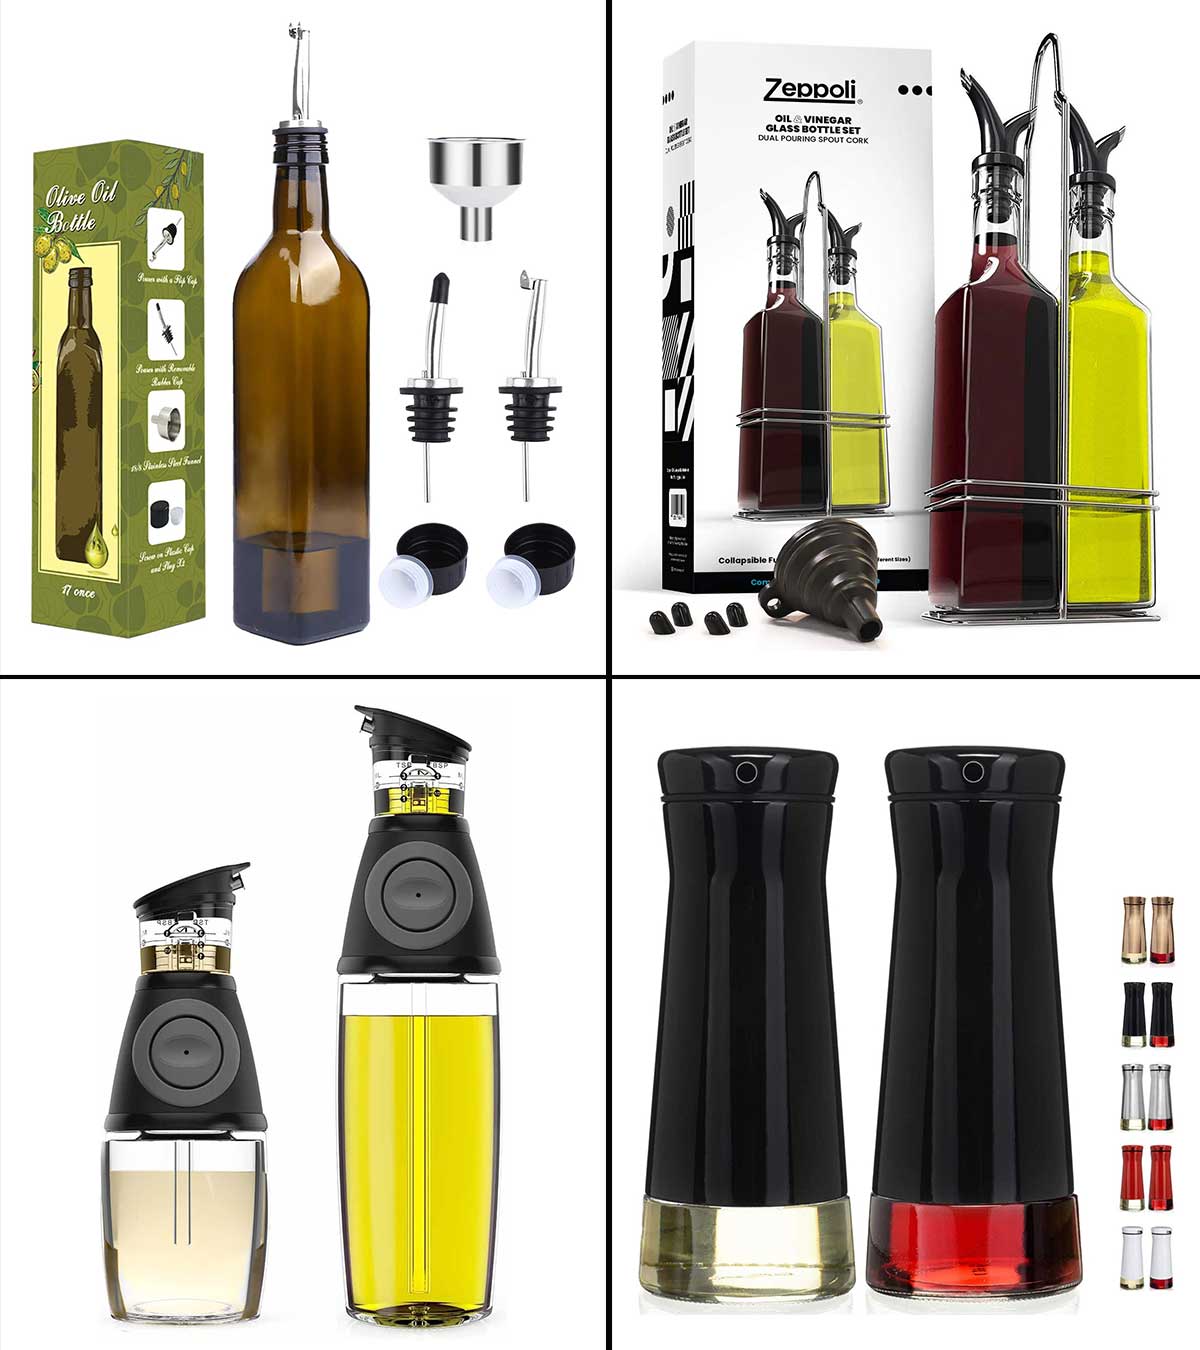 https://www.momjunction.com/wp-content/uploads/2020/09/15-Best-Olive-Oil-Dispensers-In-20201-1.jpg